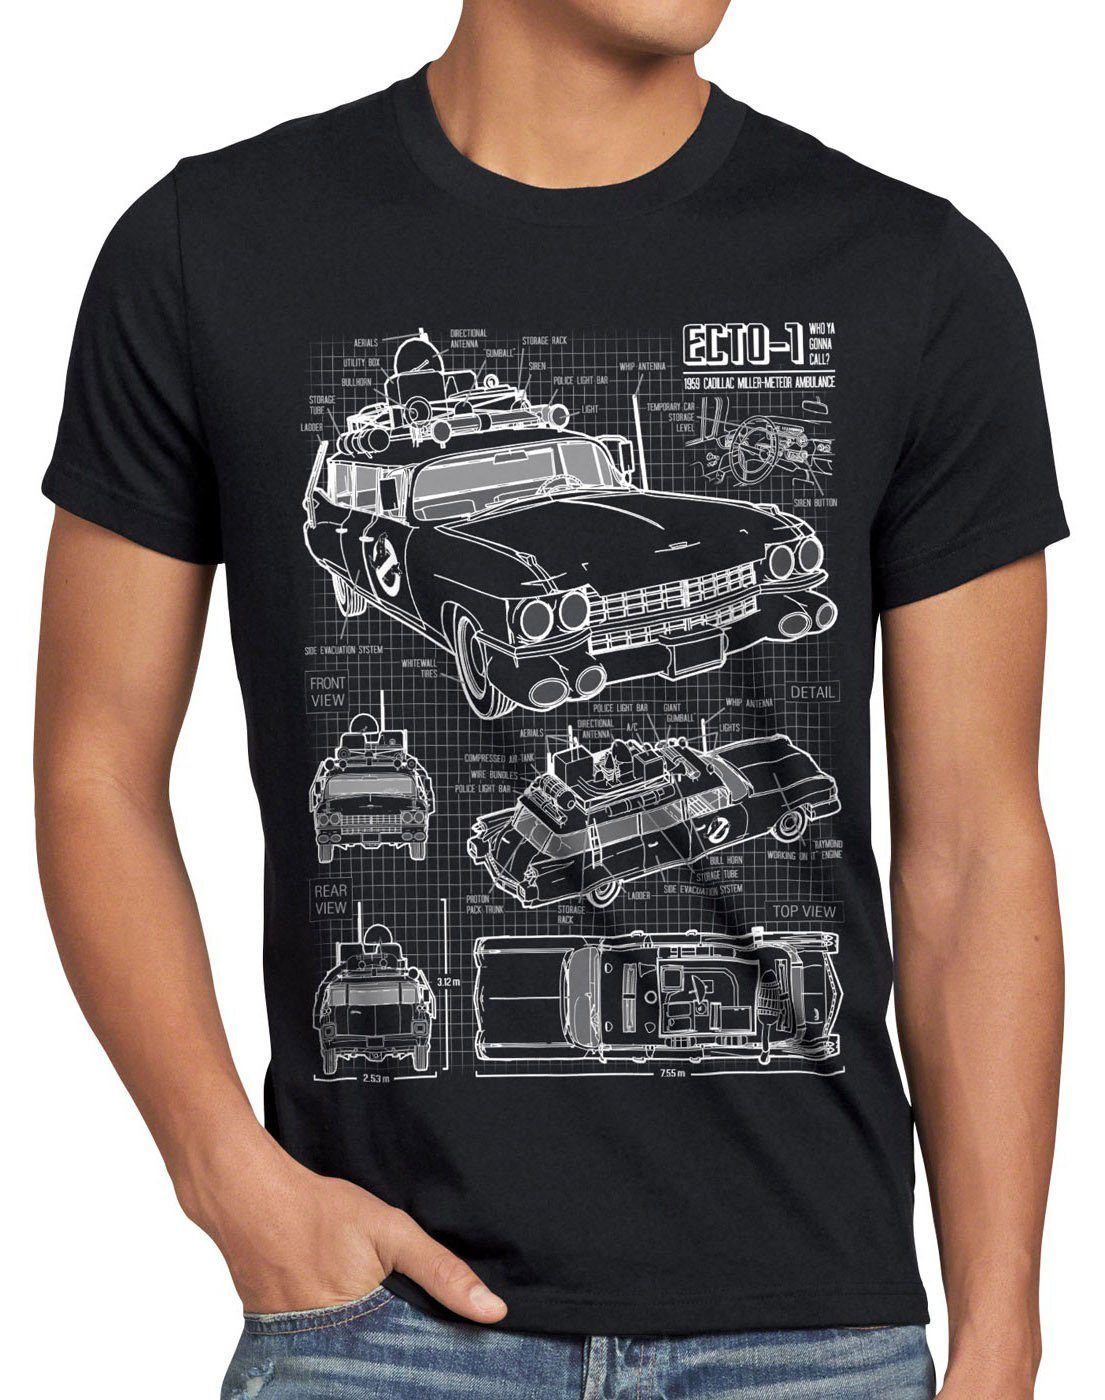 style3 Print-Shirt Herren T-Shirt ECTO-1 Blaupause busters geisterjäger ghost slimer geist auto car schwarz